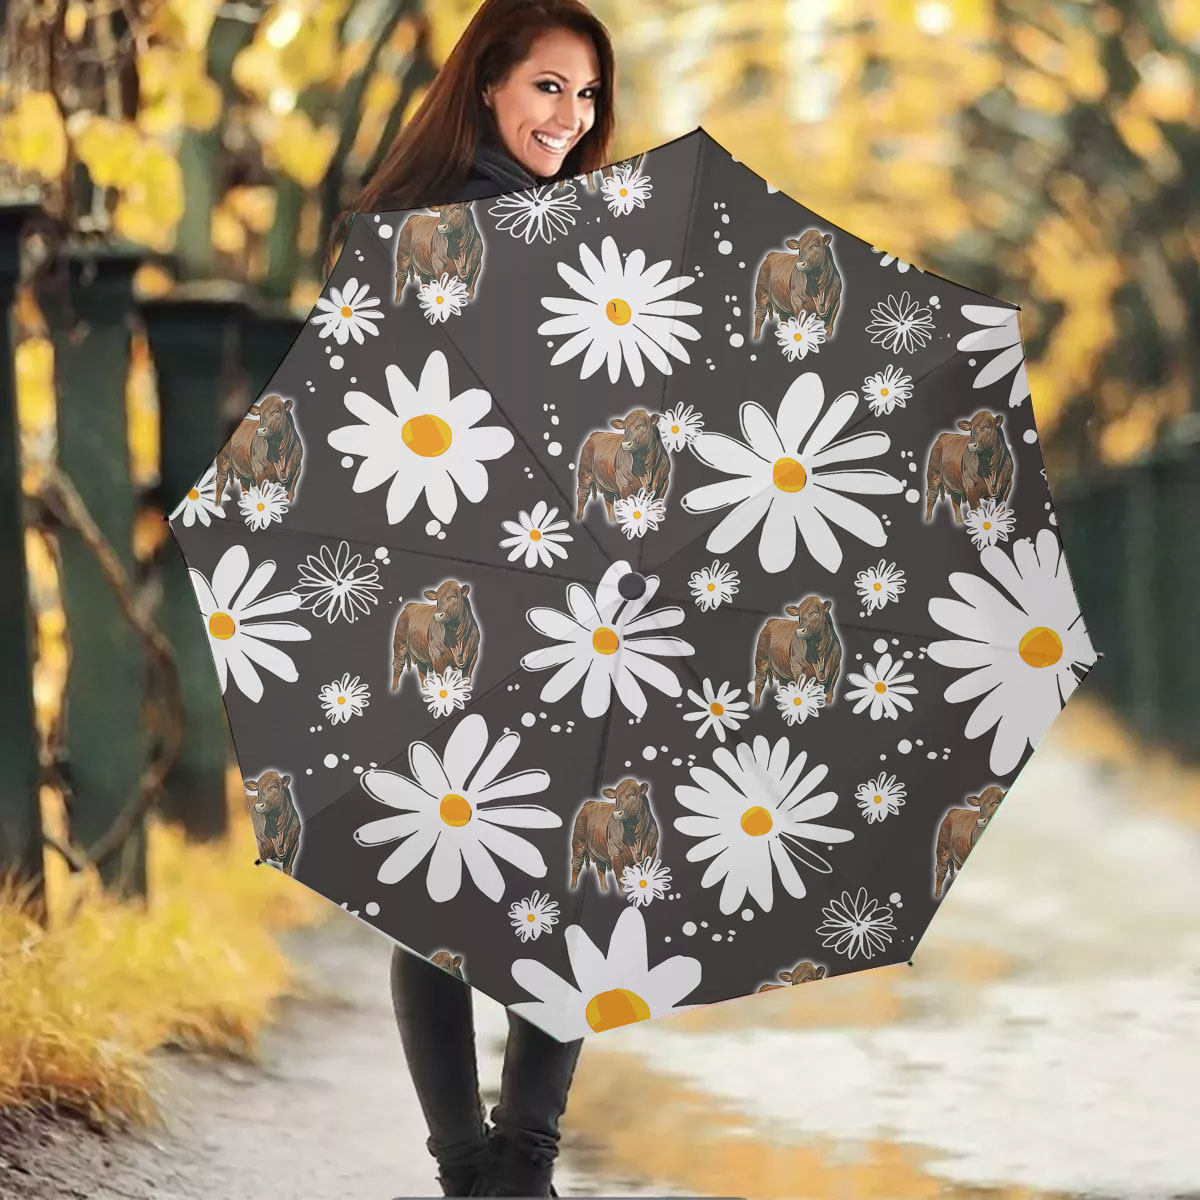 Beefmaster Daisy Flower Pattern Umbrella